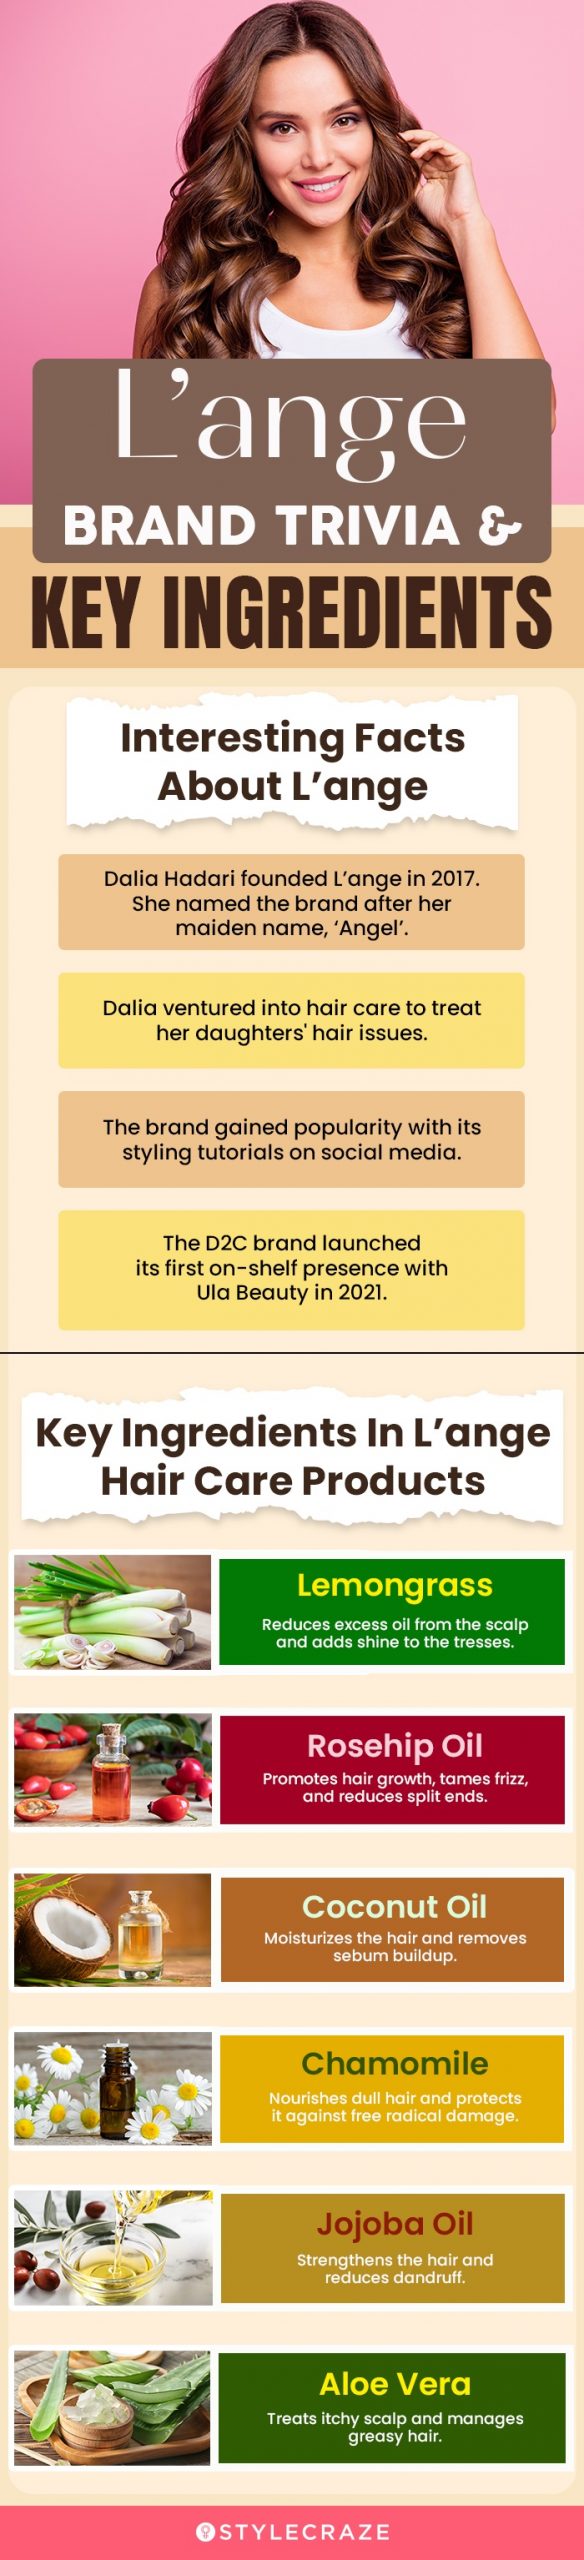 L’ange Brand Trivia & Key Ingredients (infographic)